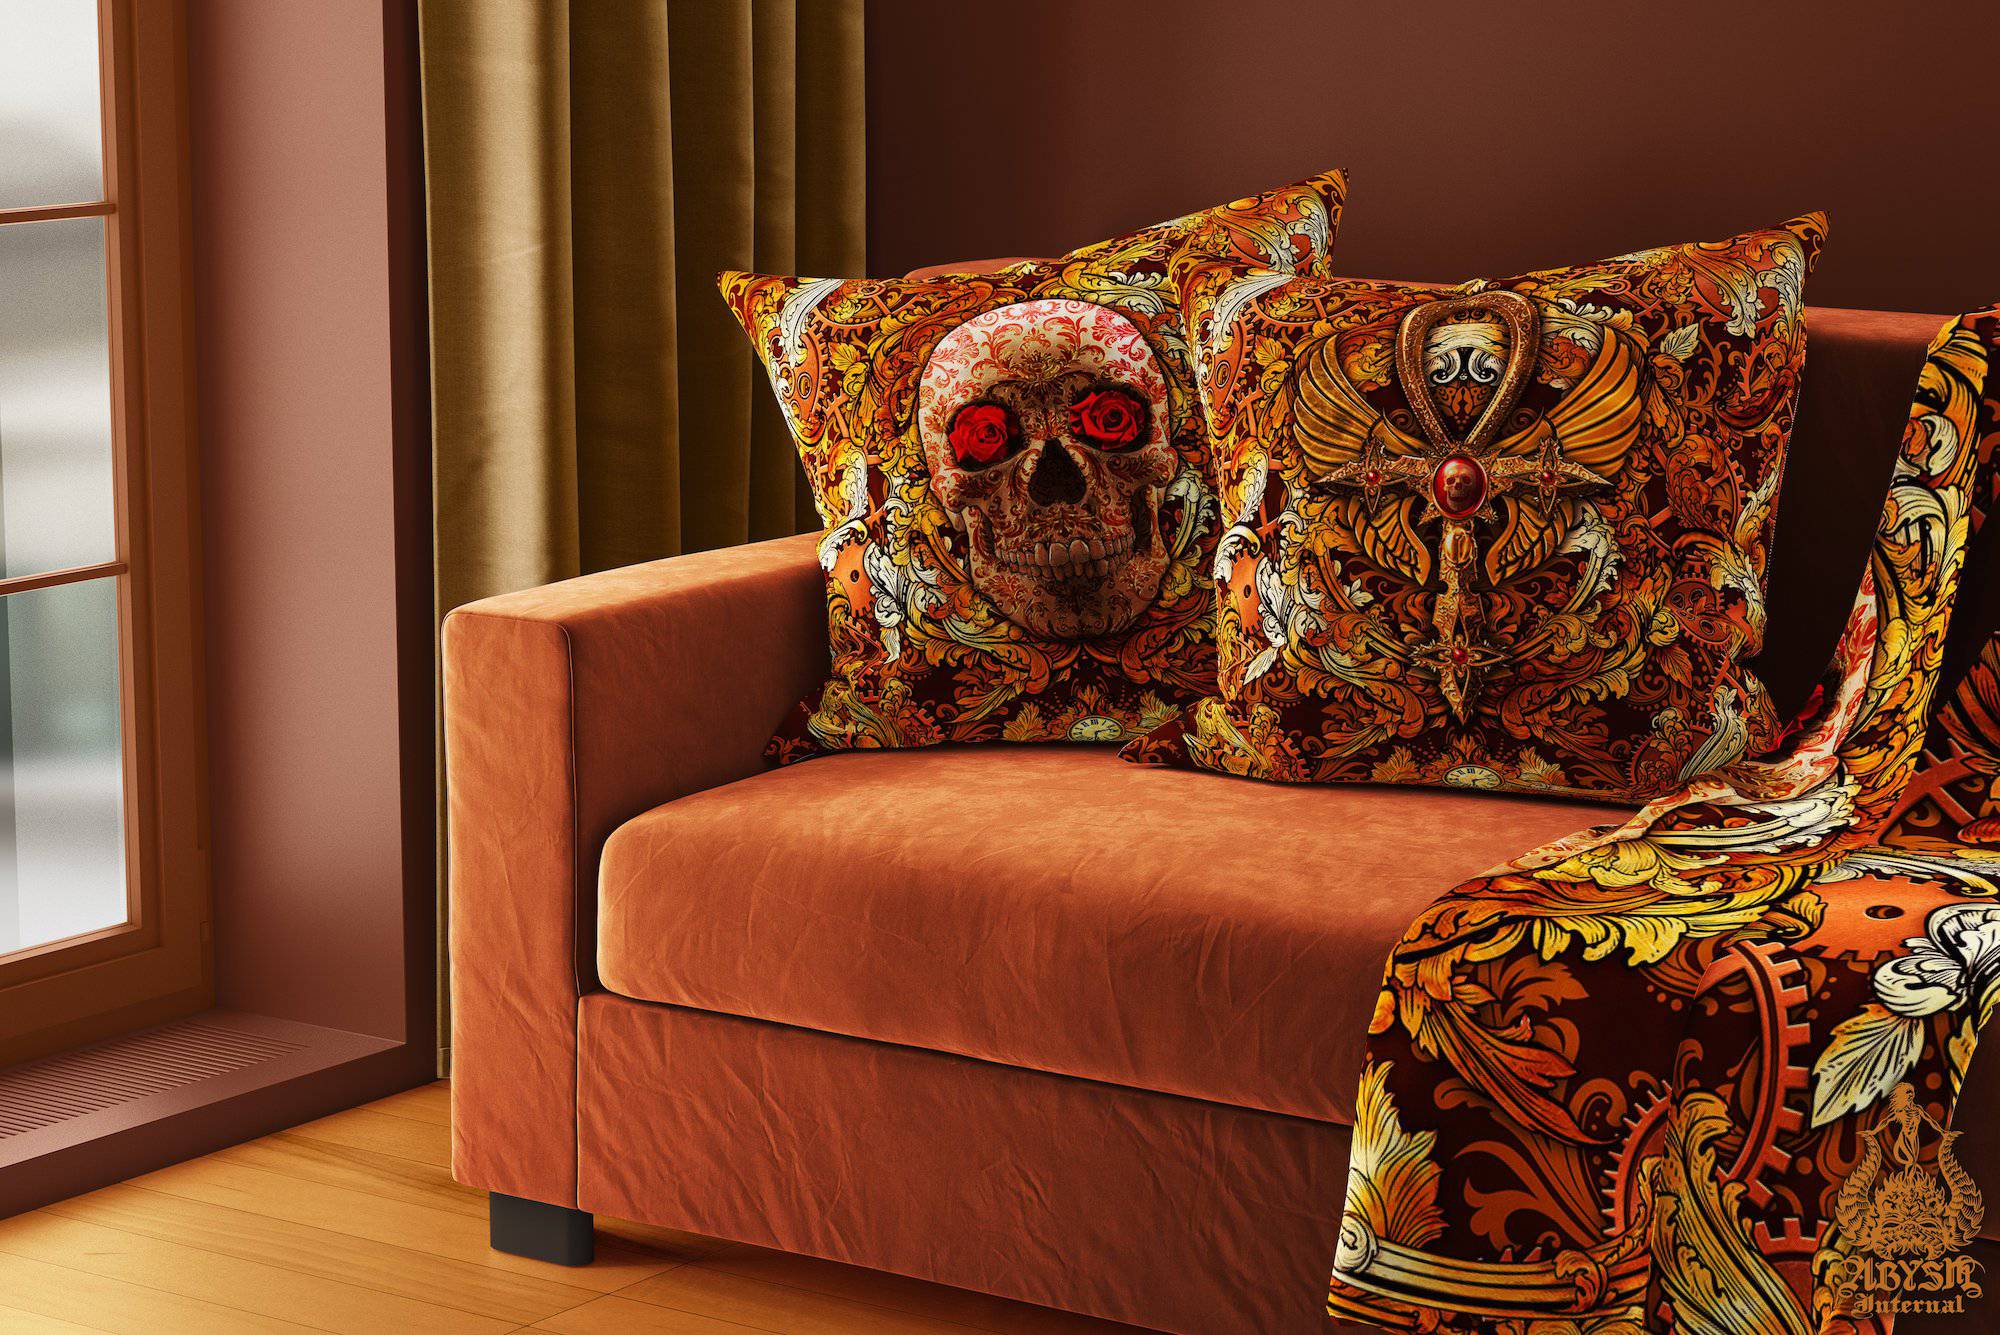 Steampunk Throw Pillow, Decorative Accent Cushion, Skull, Victorian Room Decor, Macabre Art - Abysm Internal